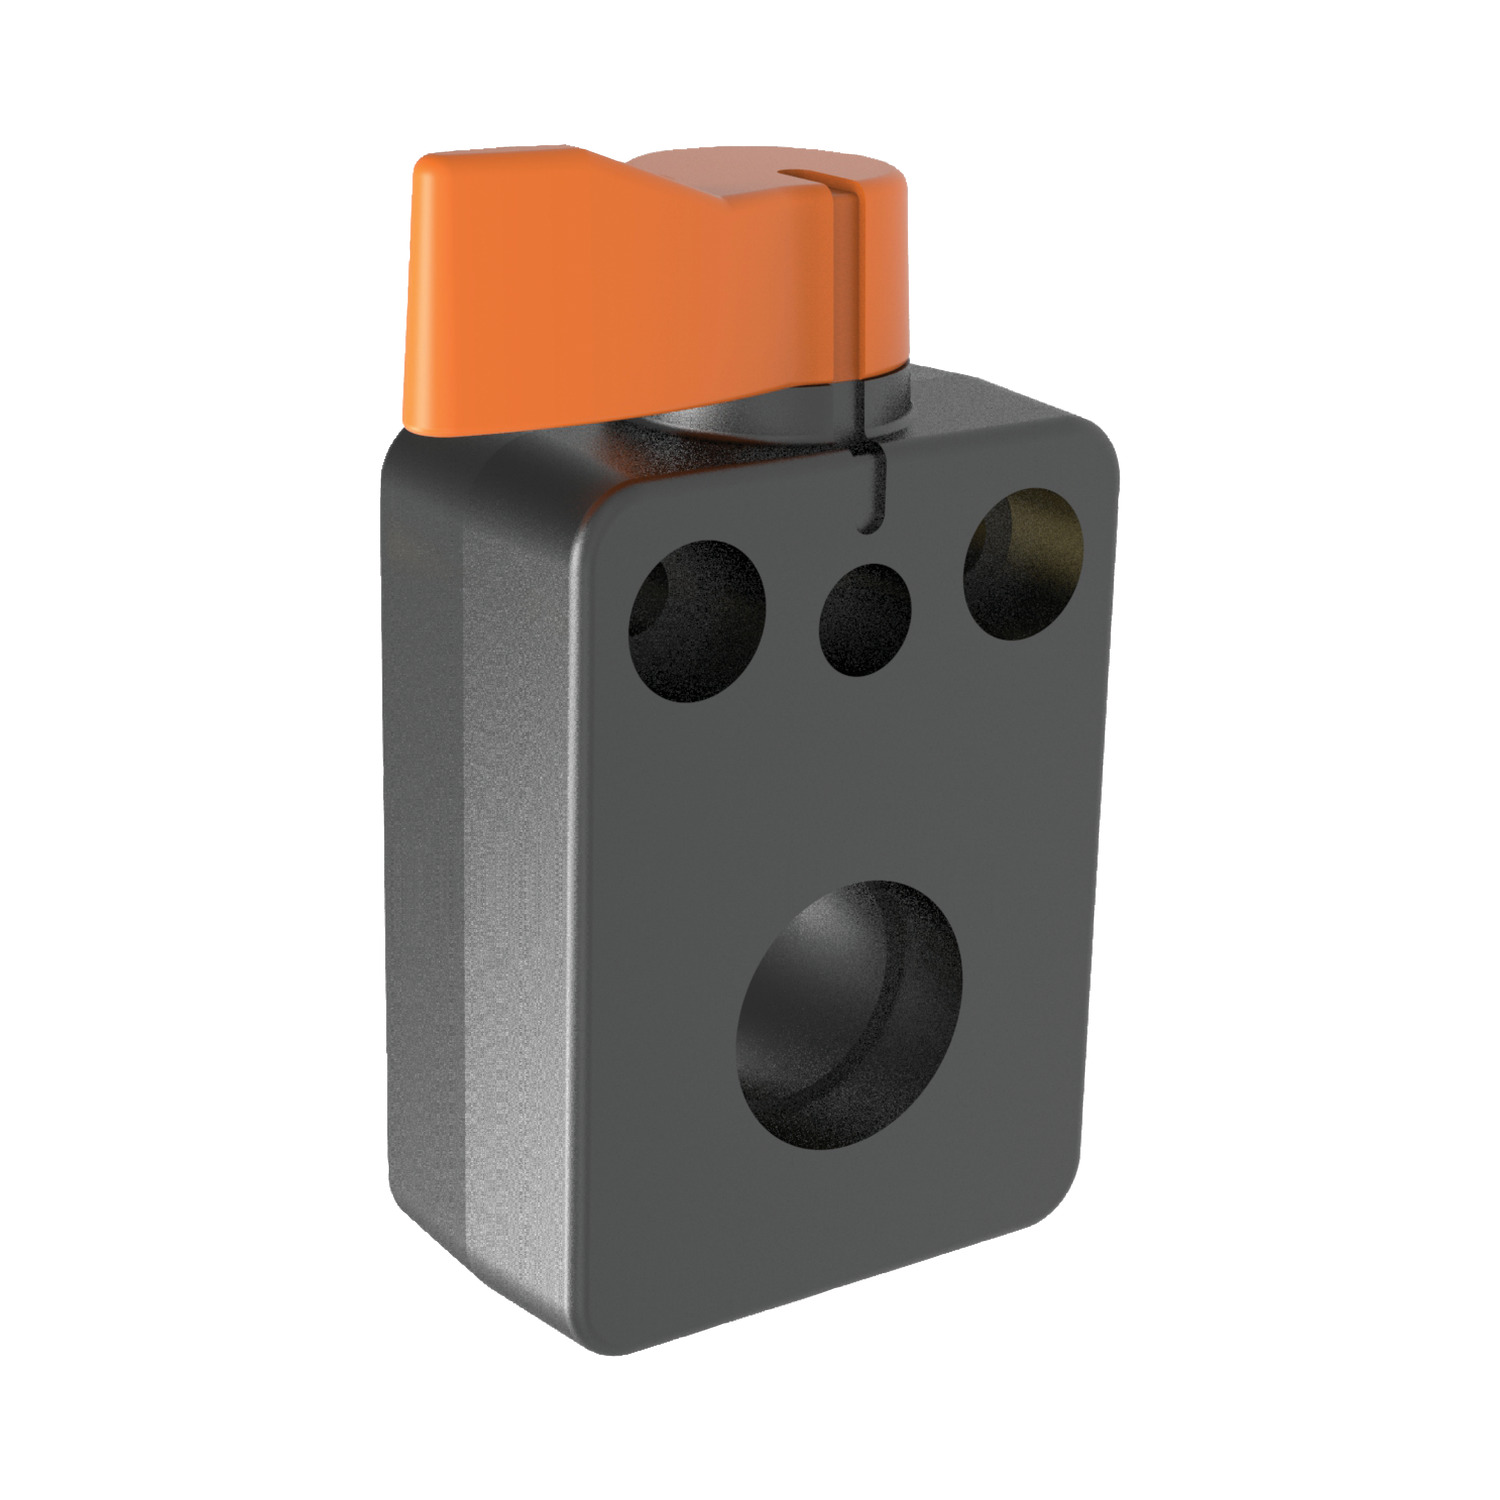 33980.W1515 One Touch Spindle Lock, Orange Handle orange handle - 15 dia - M5 EC:20192129 WG:05063055507004